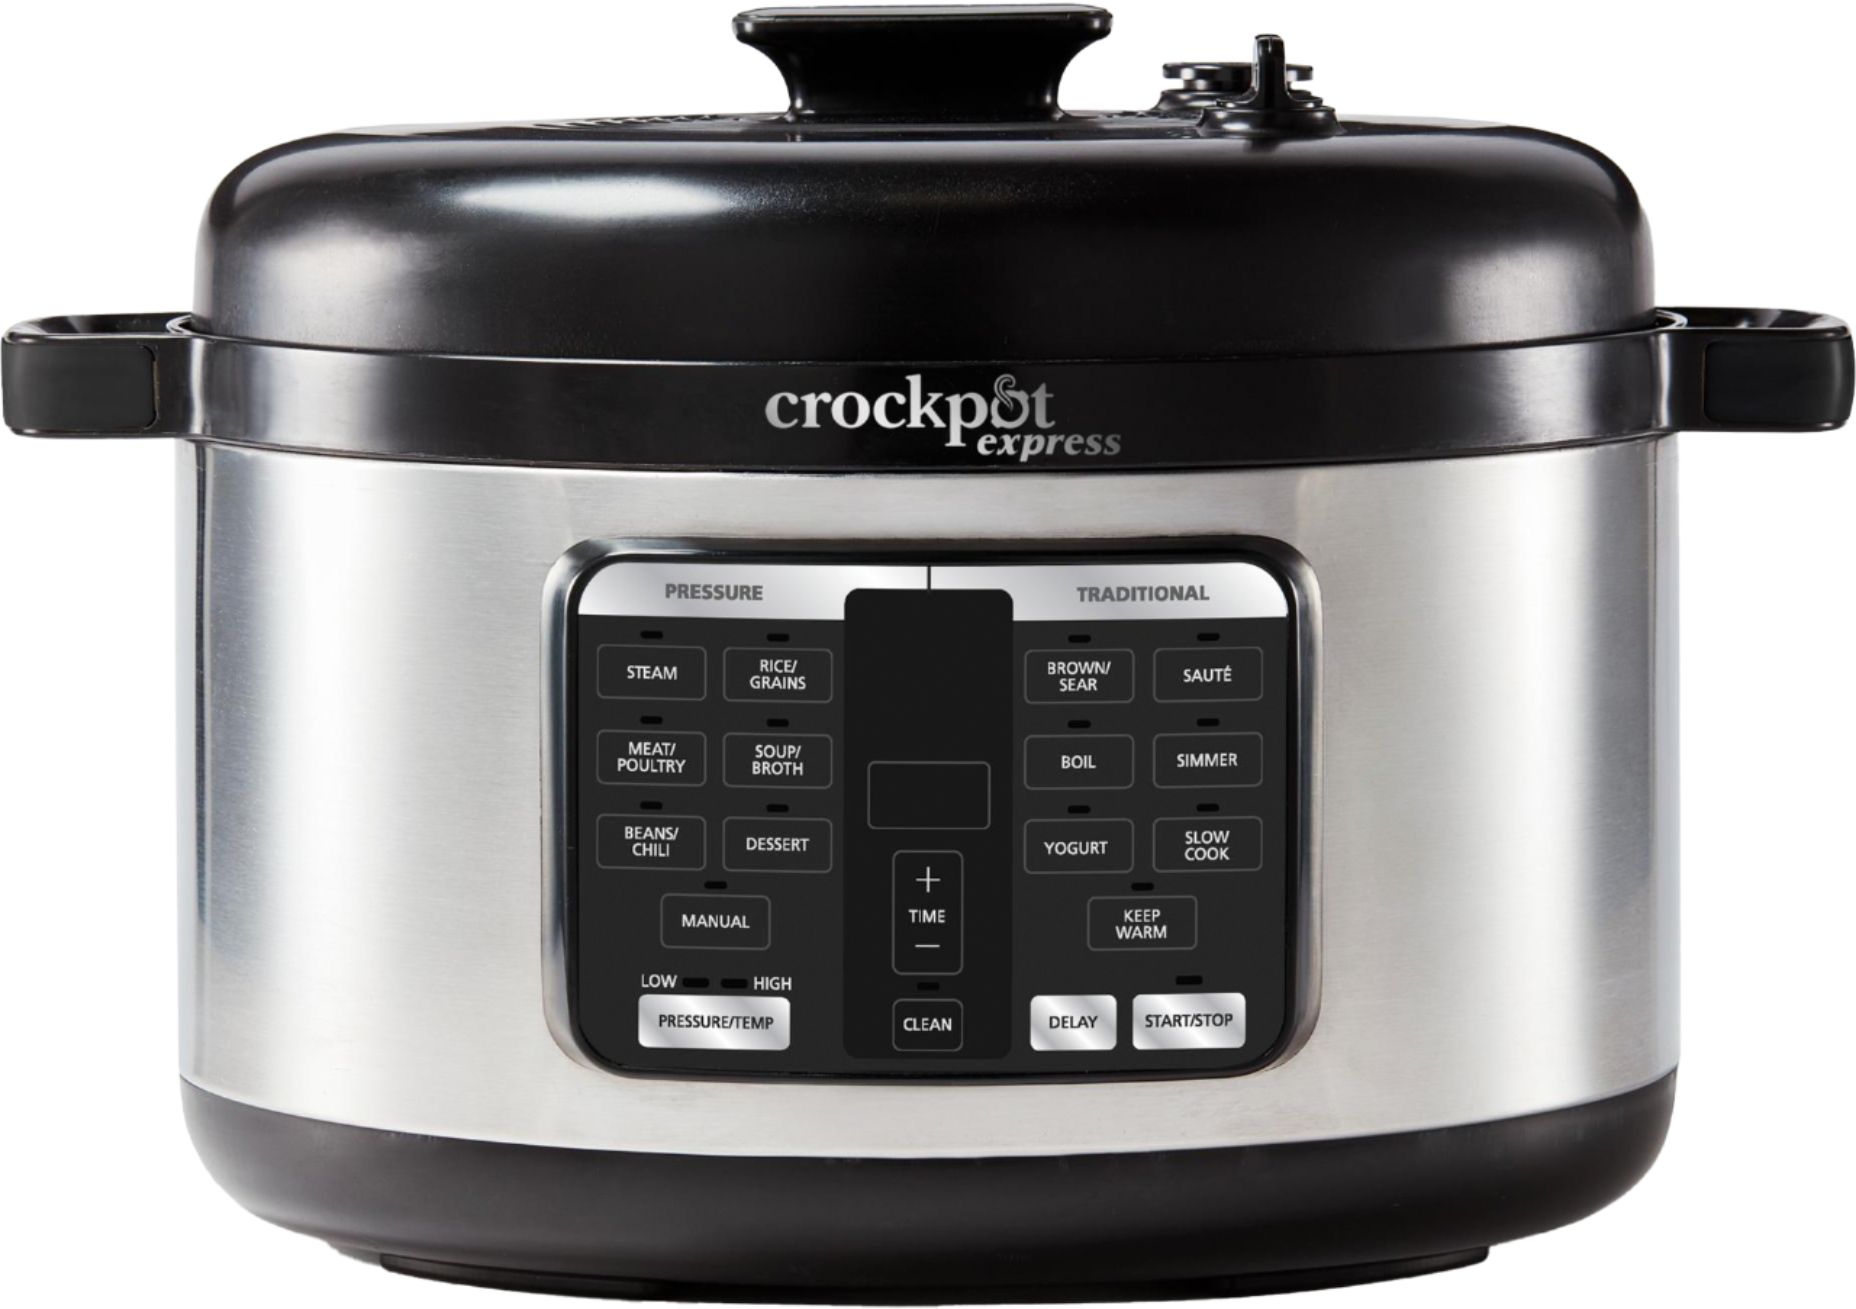 Crock-Pot – Express Oval Multi Function Pressure Cooker – Just $59.99 at Best Buy